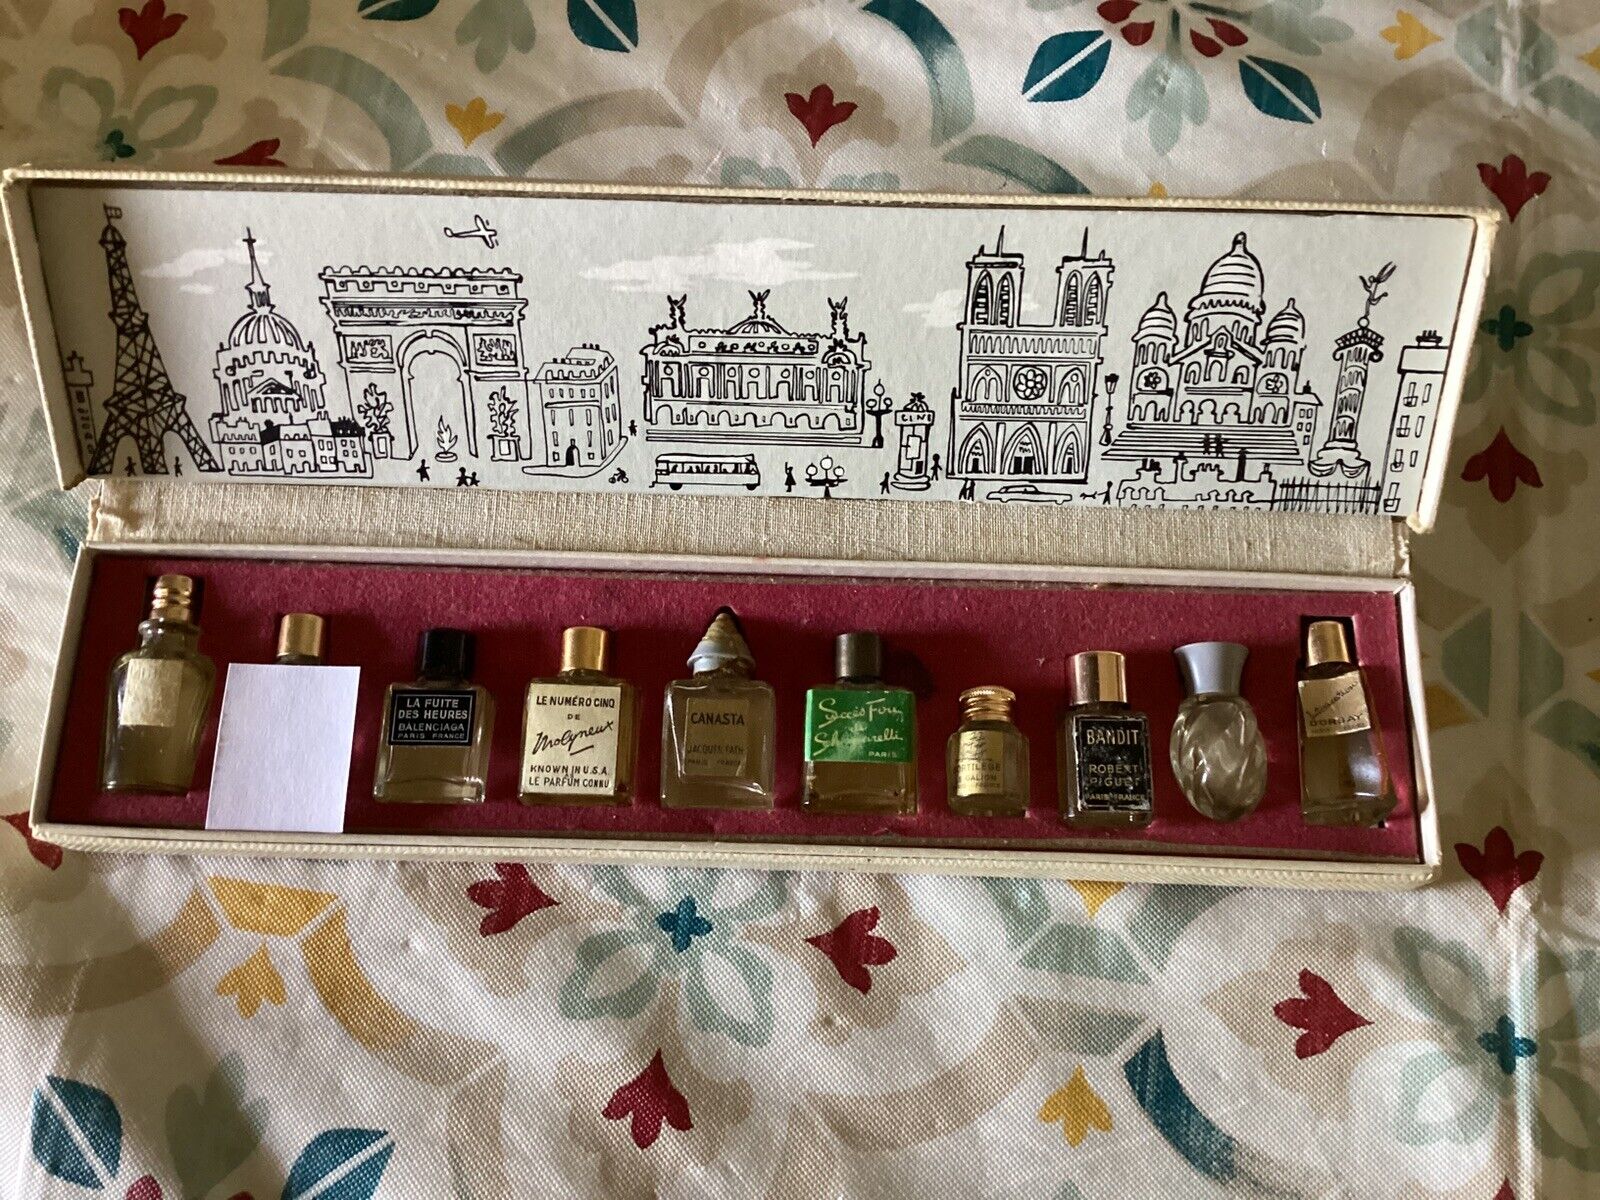 VTG MCM Original Box With 10 Empty Micro/Mini Parfum Bottles From France